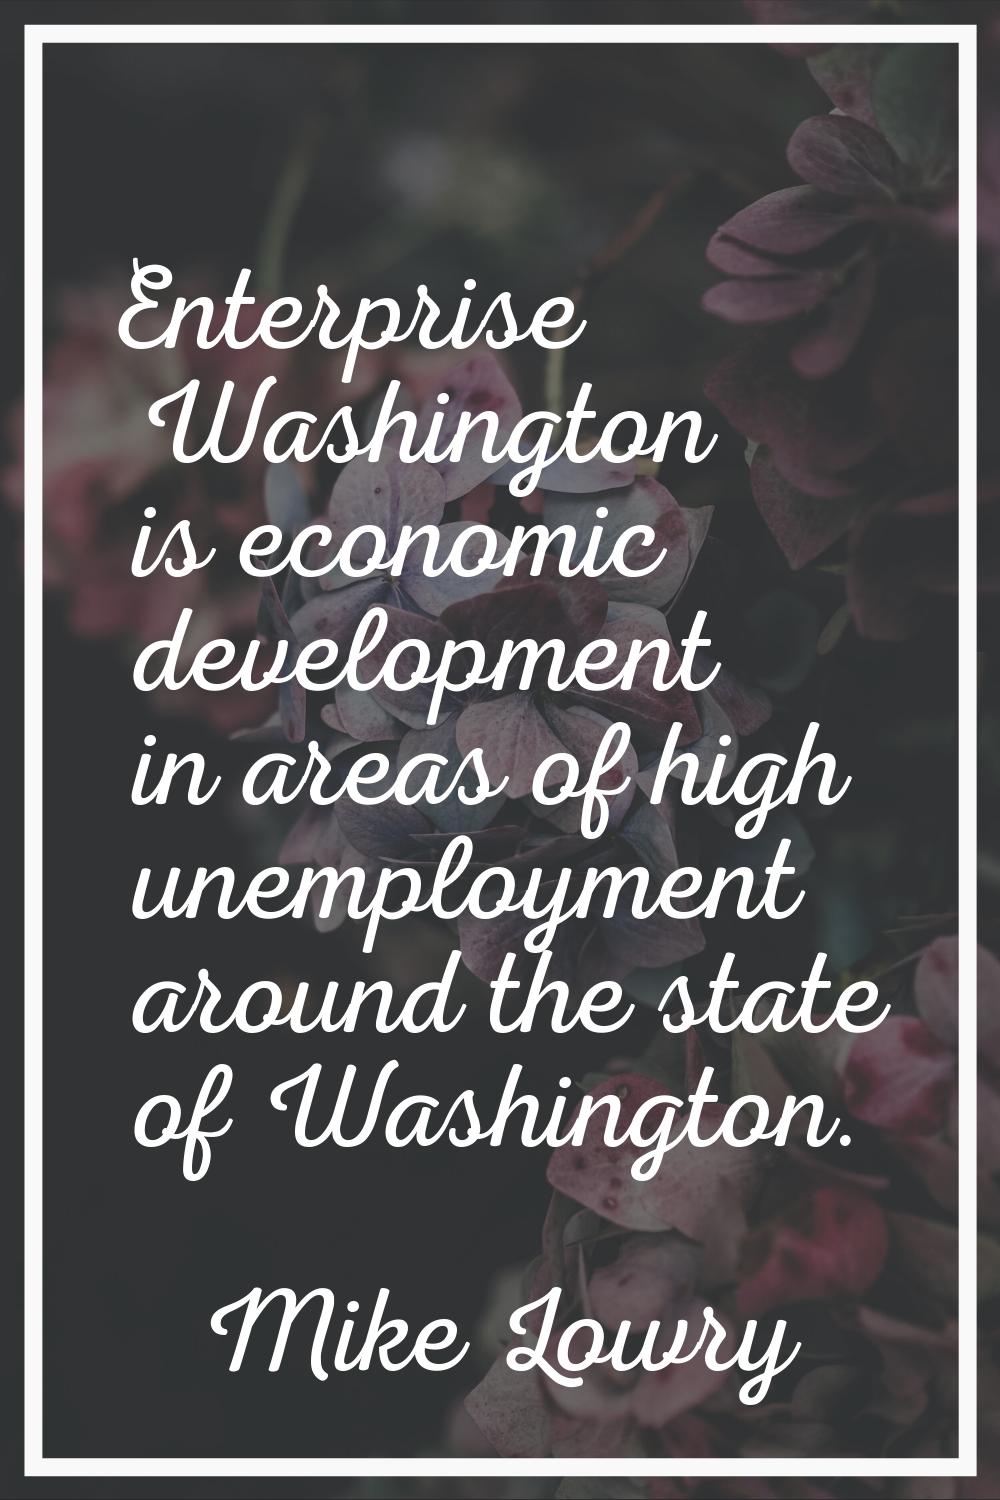 Enterprise Washington is economic development in areas of high unemployment around the state of Was